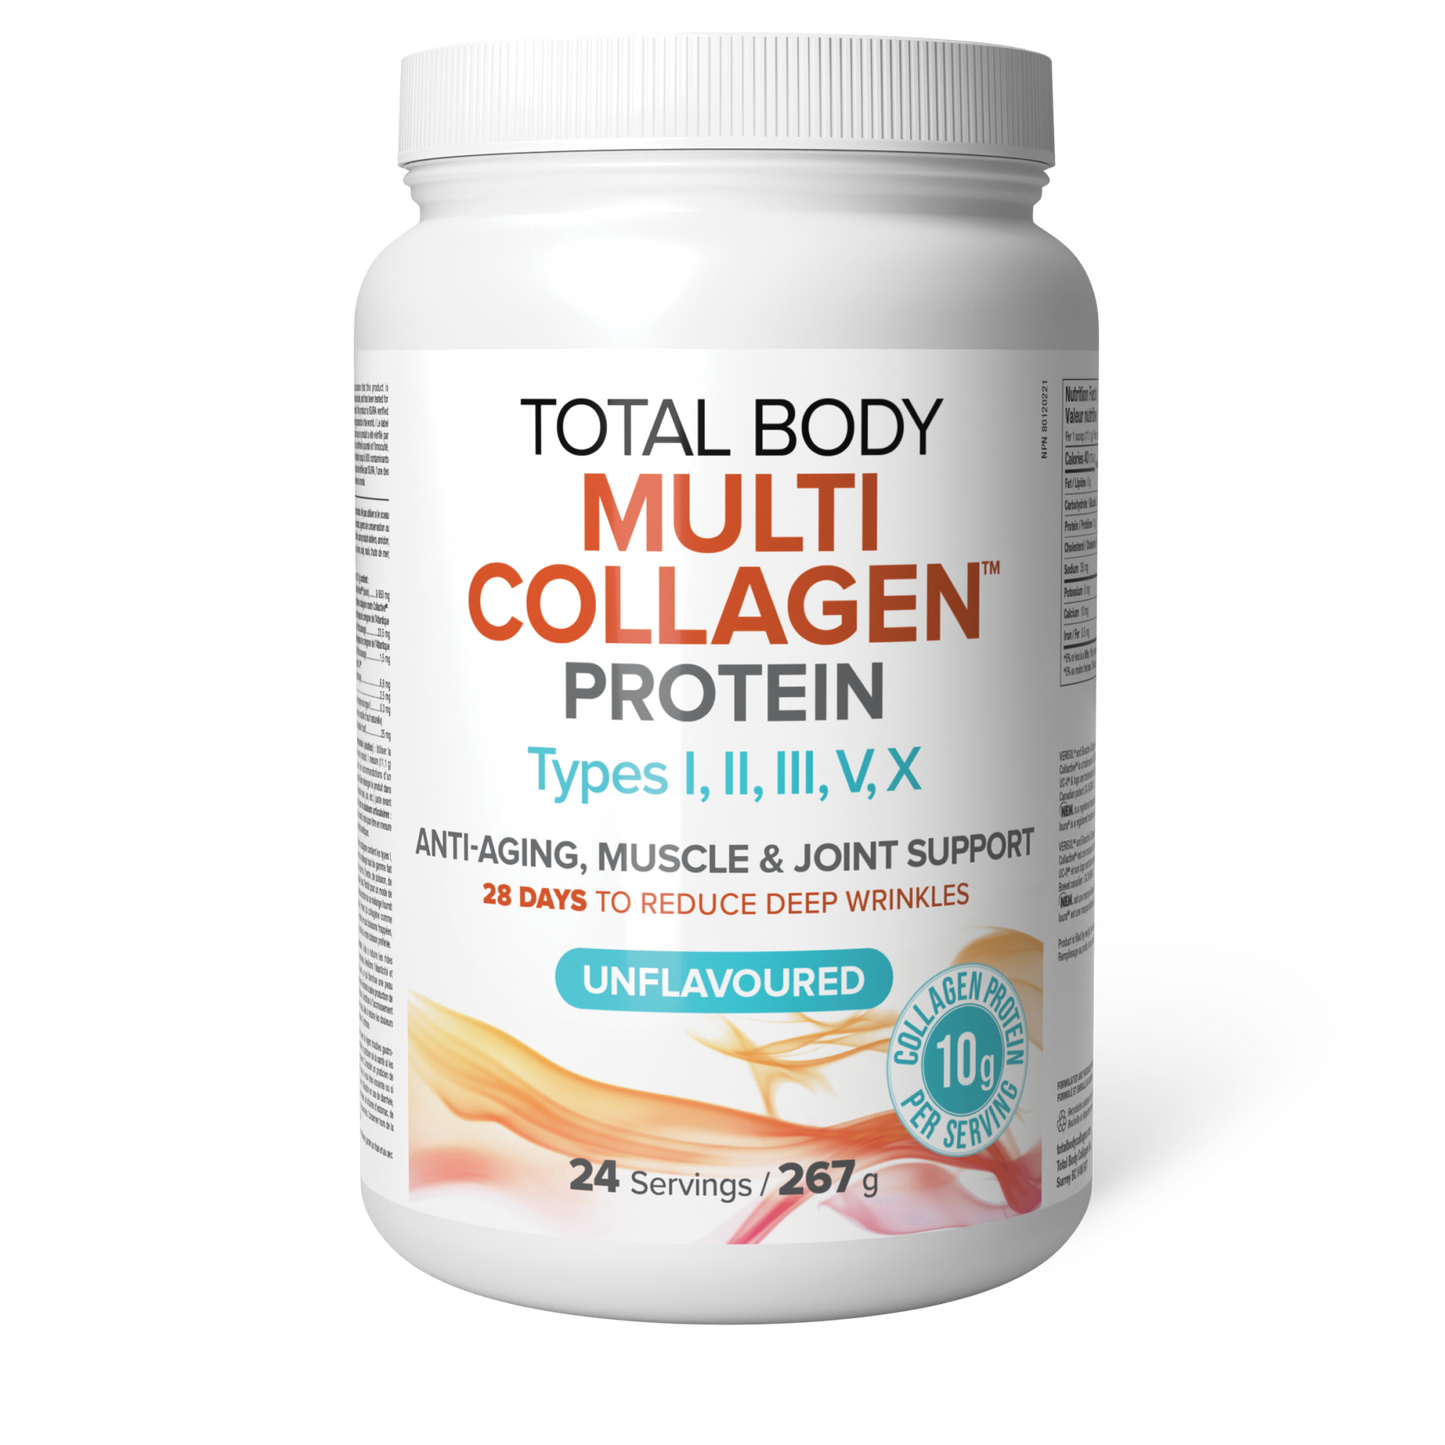 Total Body Multi Collagen™, Total Body Collagen|v|image|2645